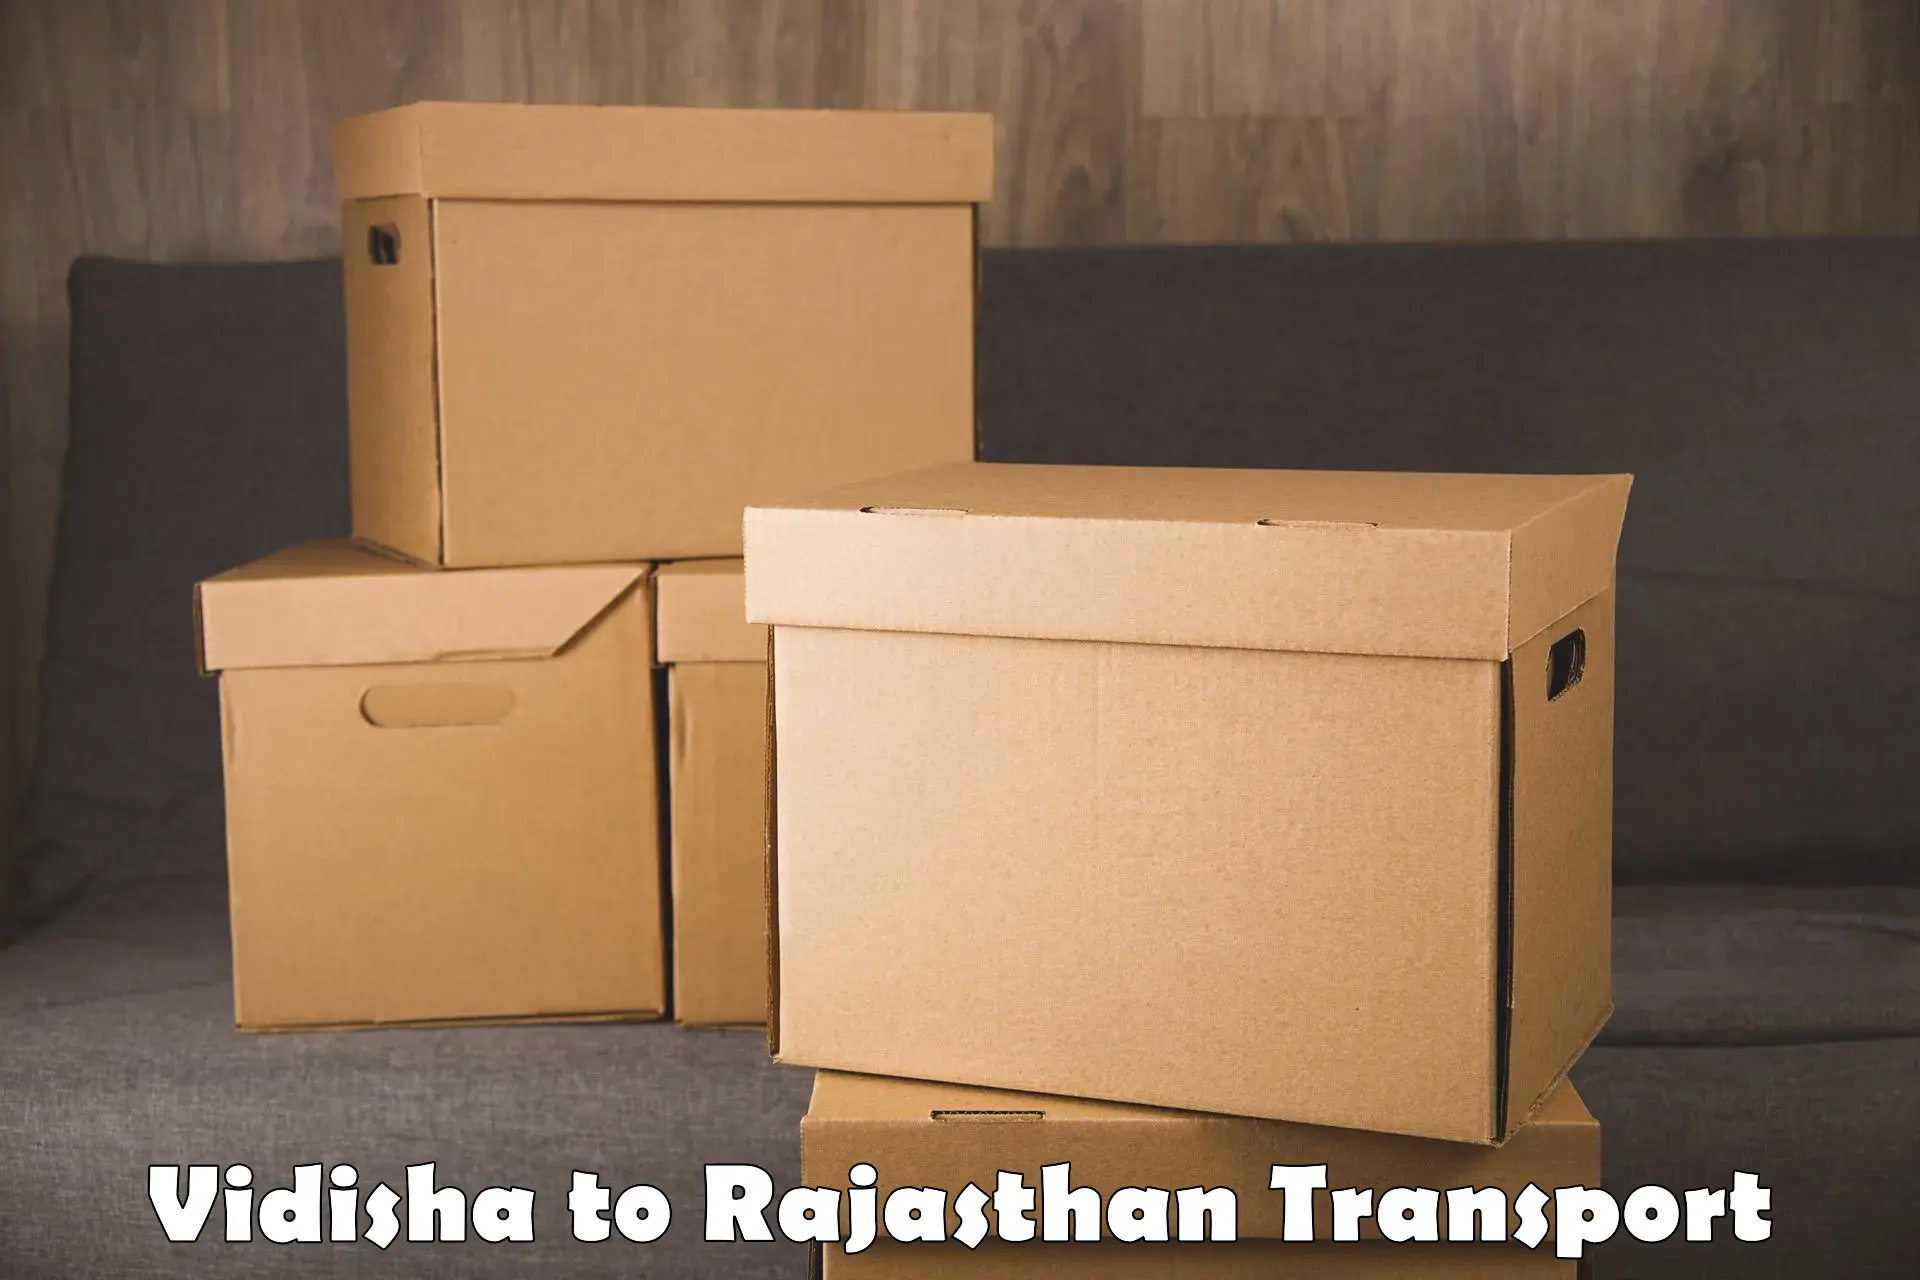 Truck transport companies in India Vidisha to Kota